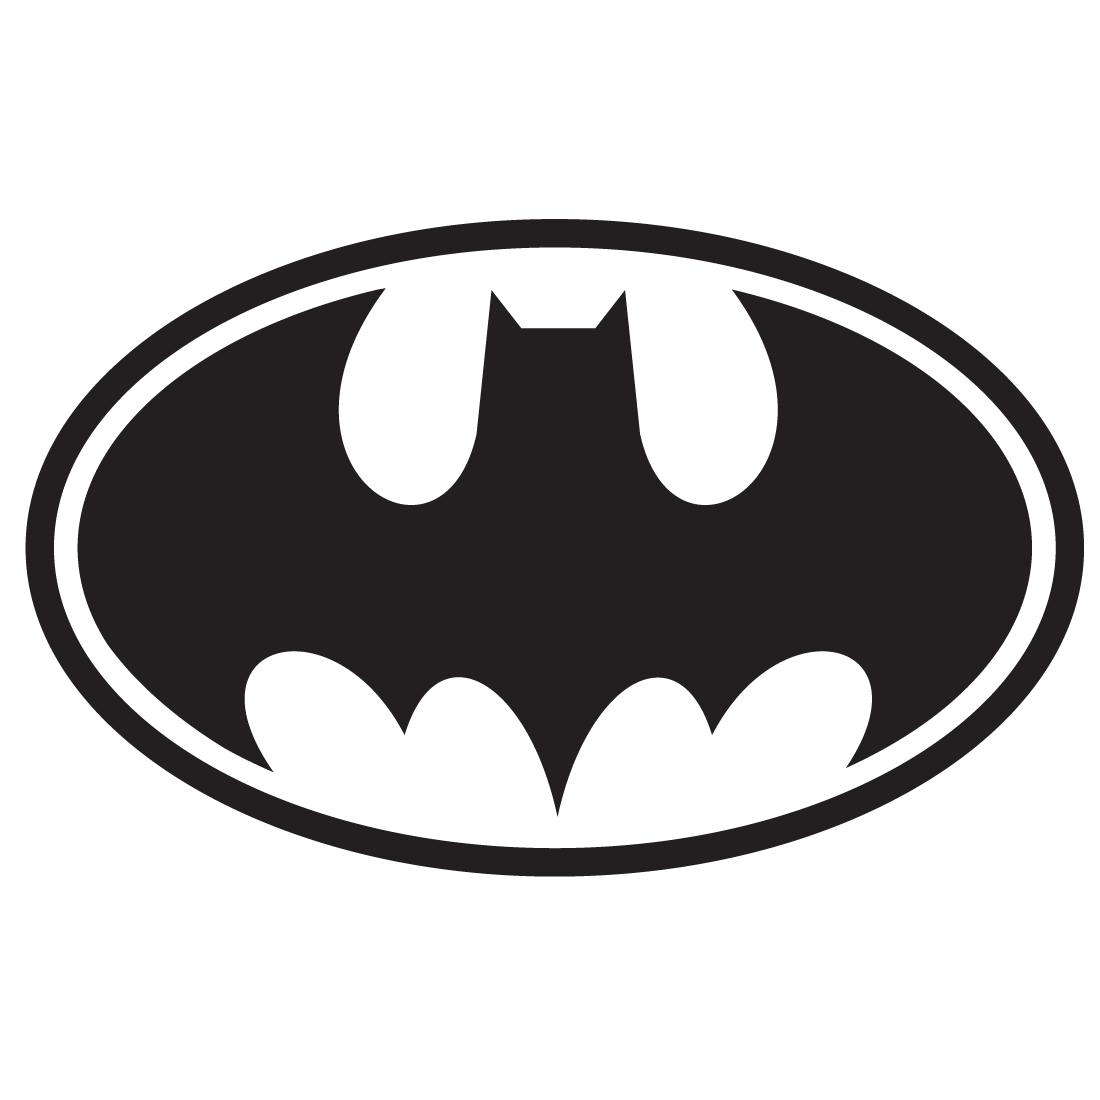 Batman logo decal vinyl sticker sticker - Comics & Videogames ...